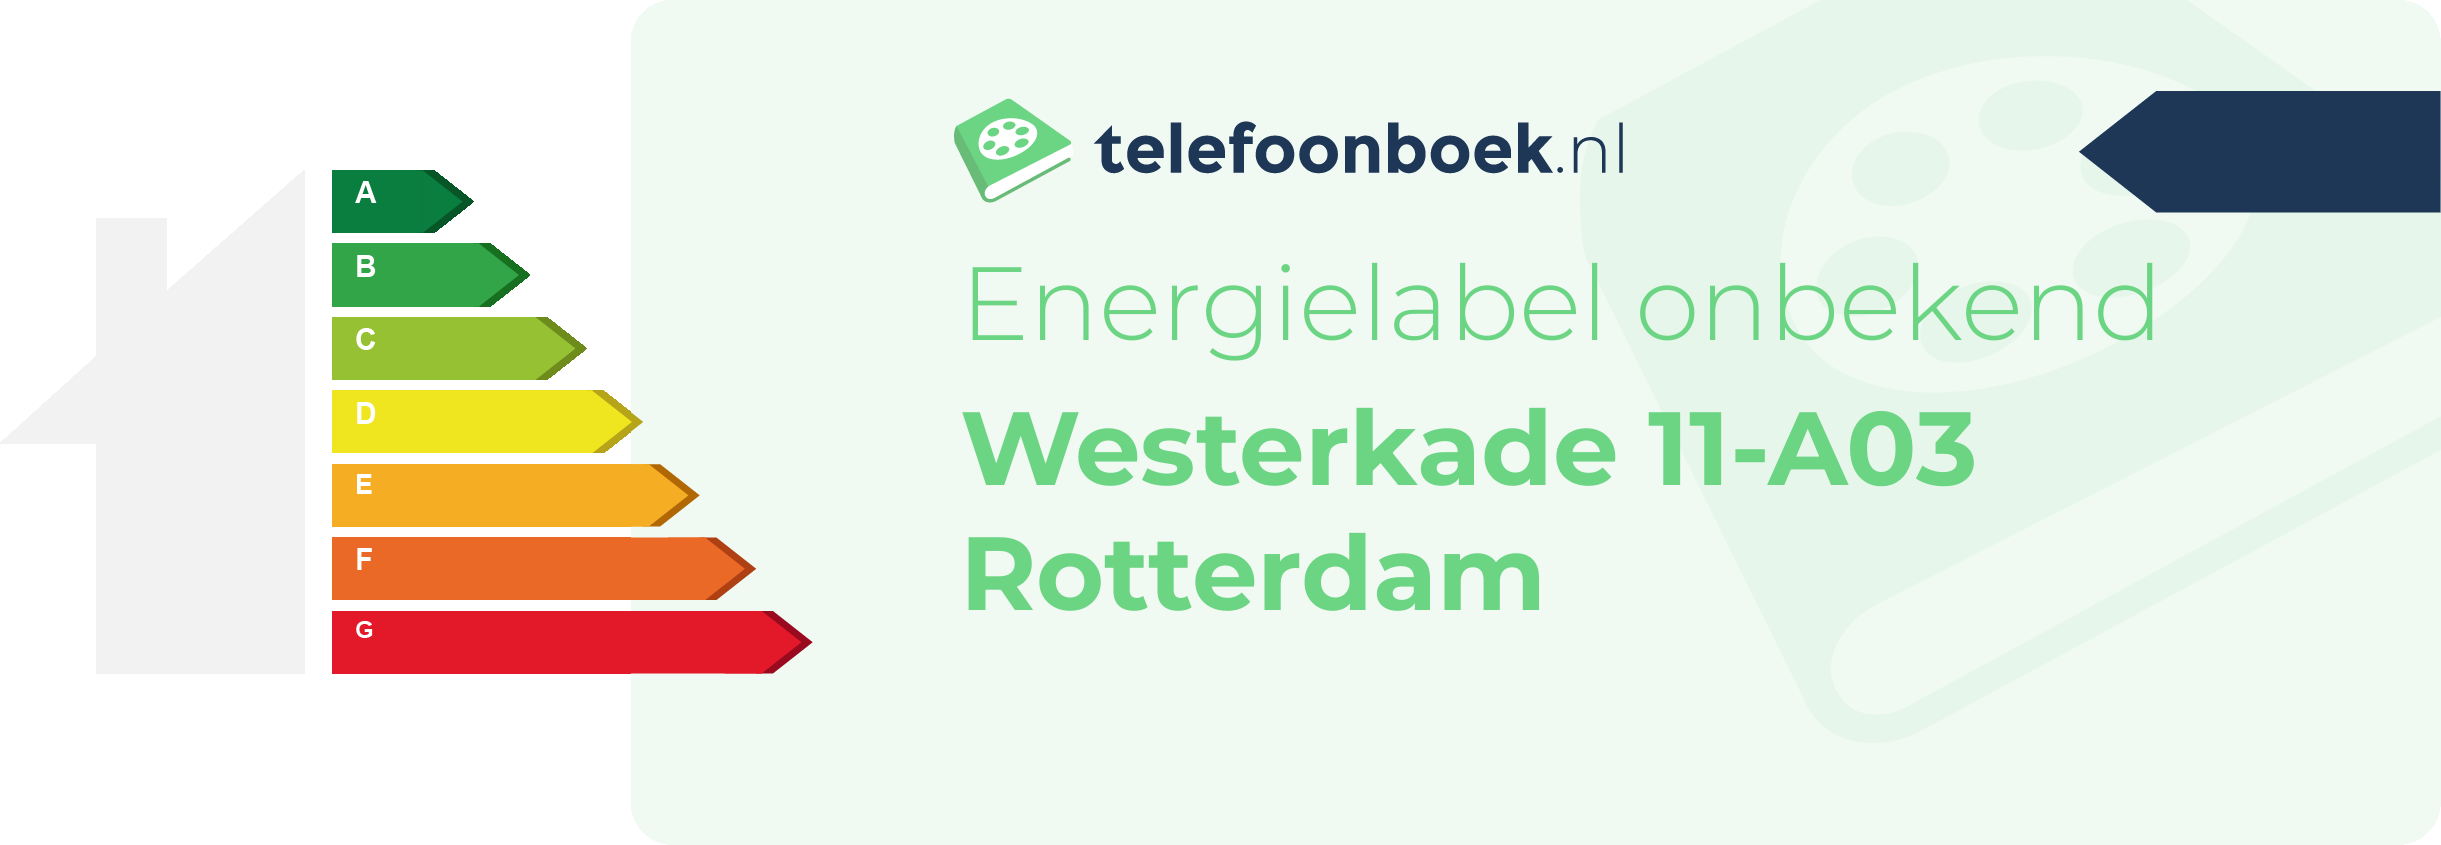 Energielabel Westerkade 11-A03 Rotterdam